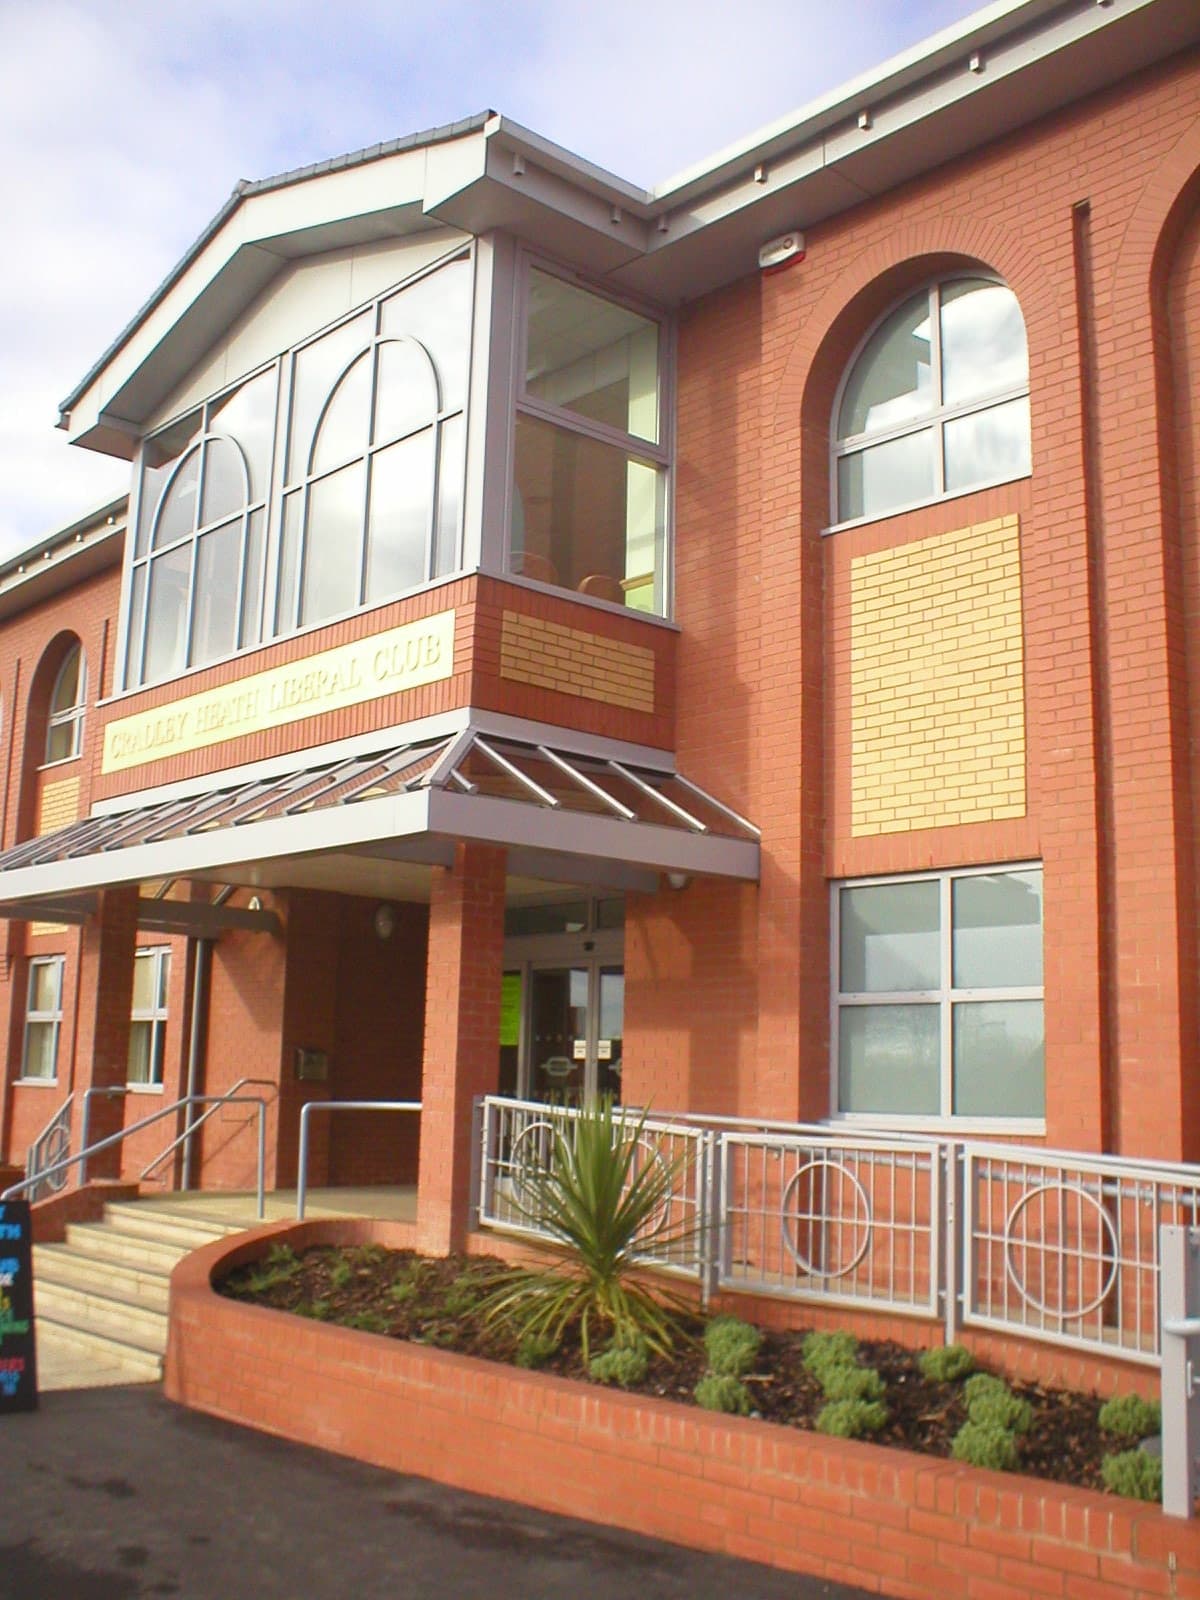 Cradley Heath Liberal Club, West Midlands